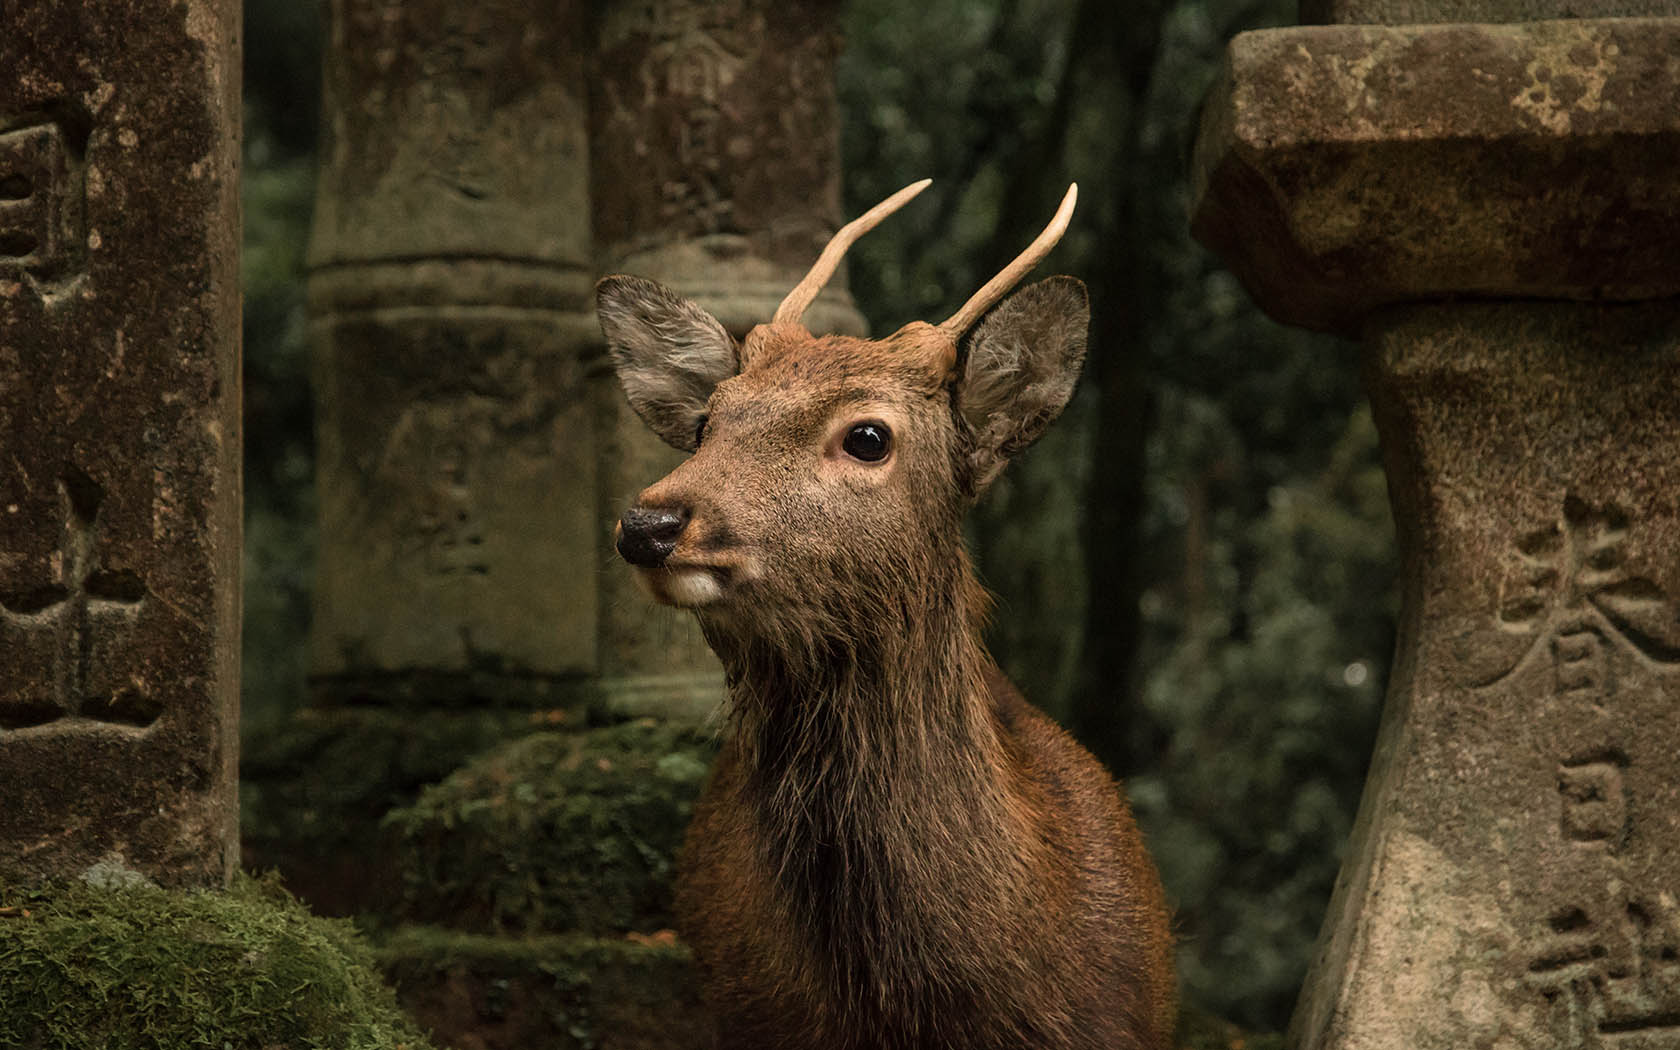 A deer in Nara, Japan